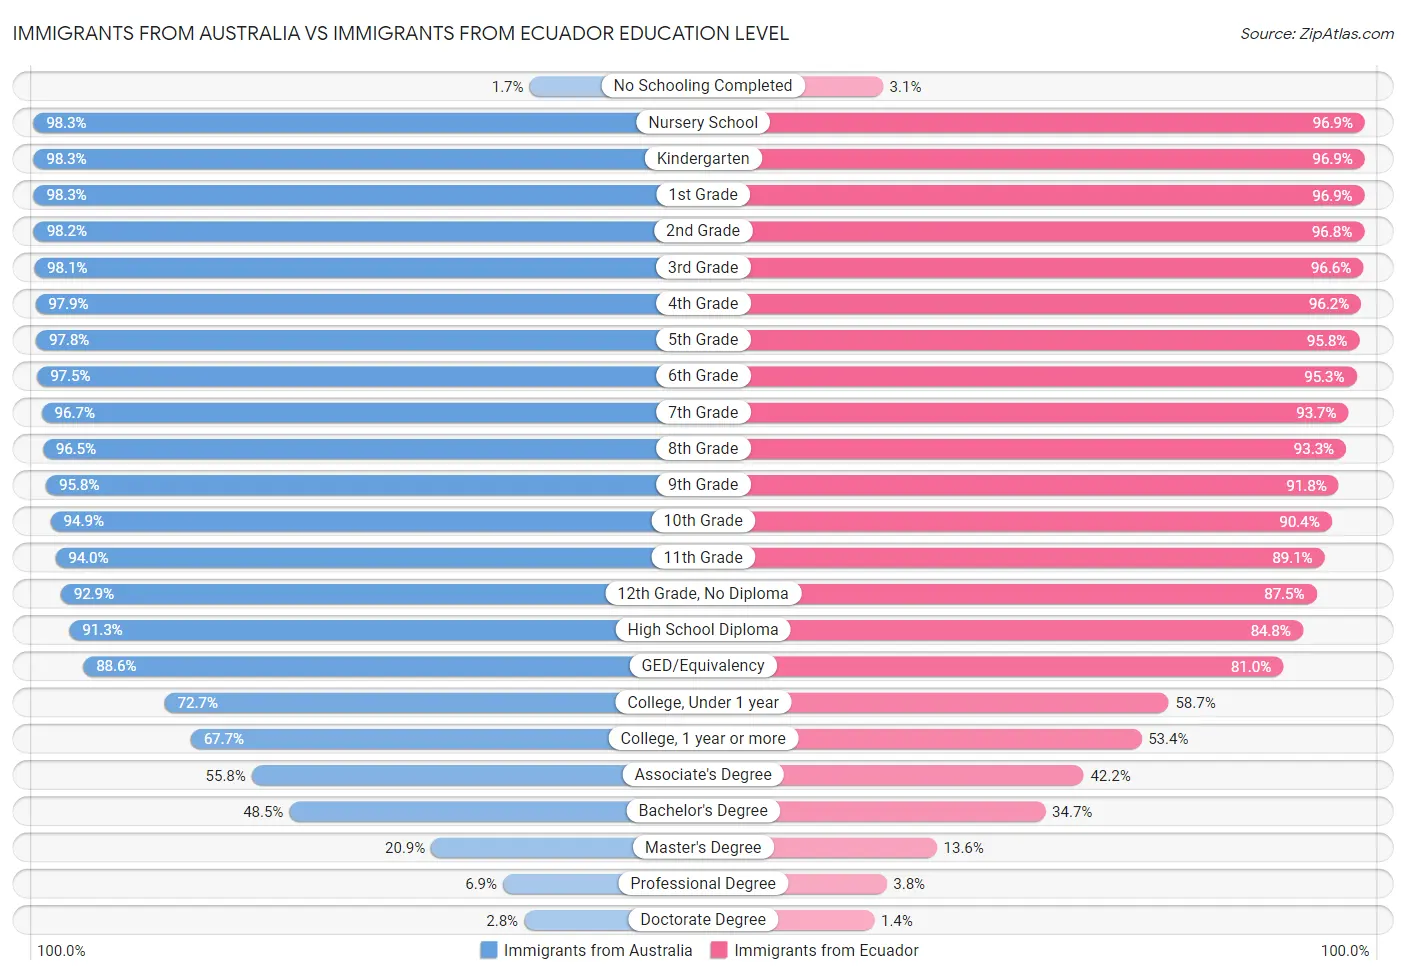 Immigrants from Australia vs Immigrants from Ecuador Education Level